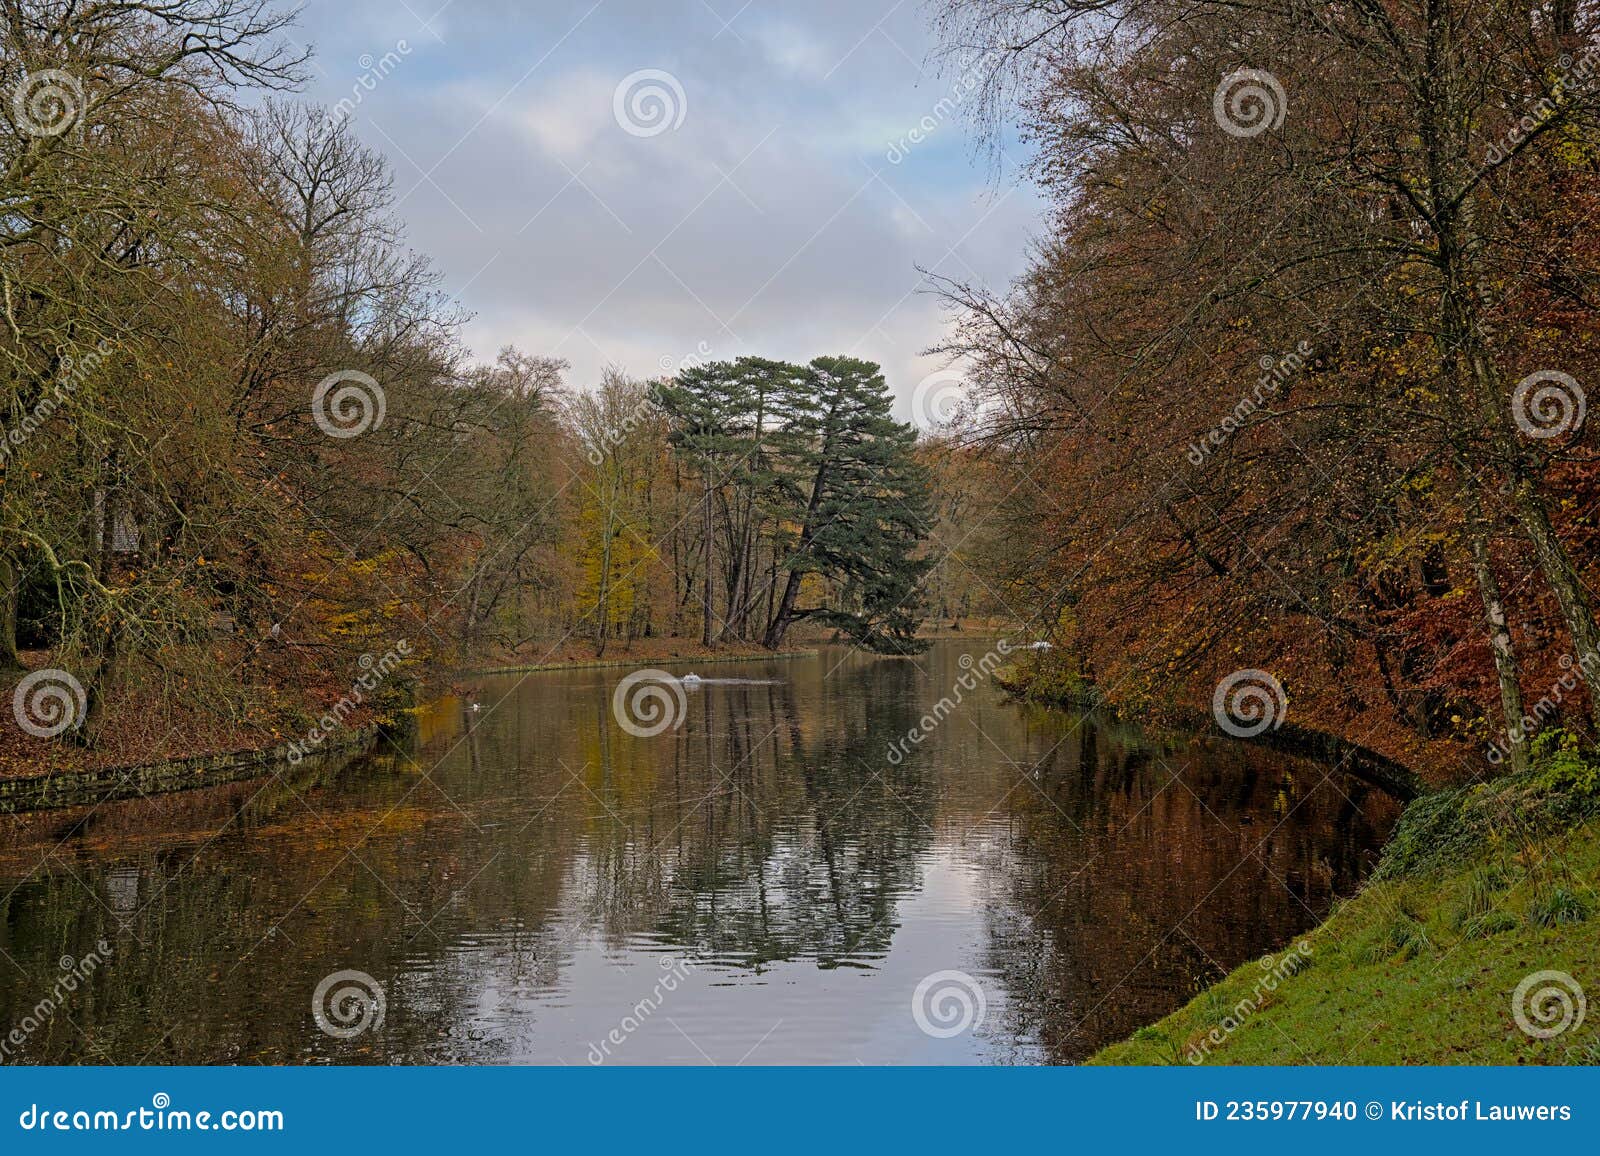 lake surrounded by colourful autumn trees in bois de la chambre park, brussels